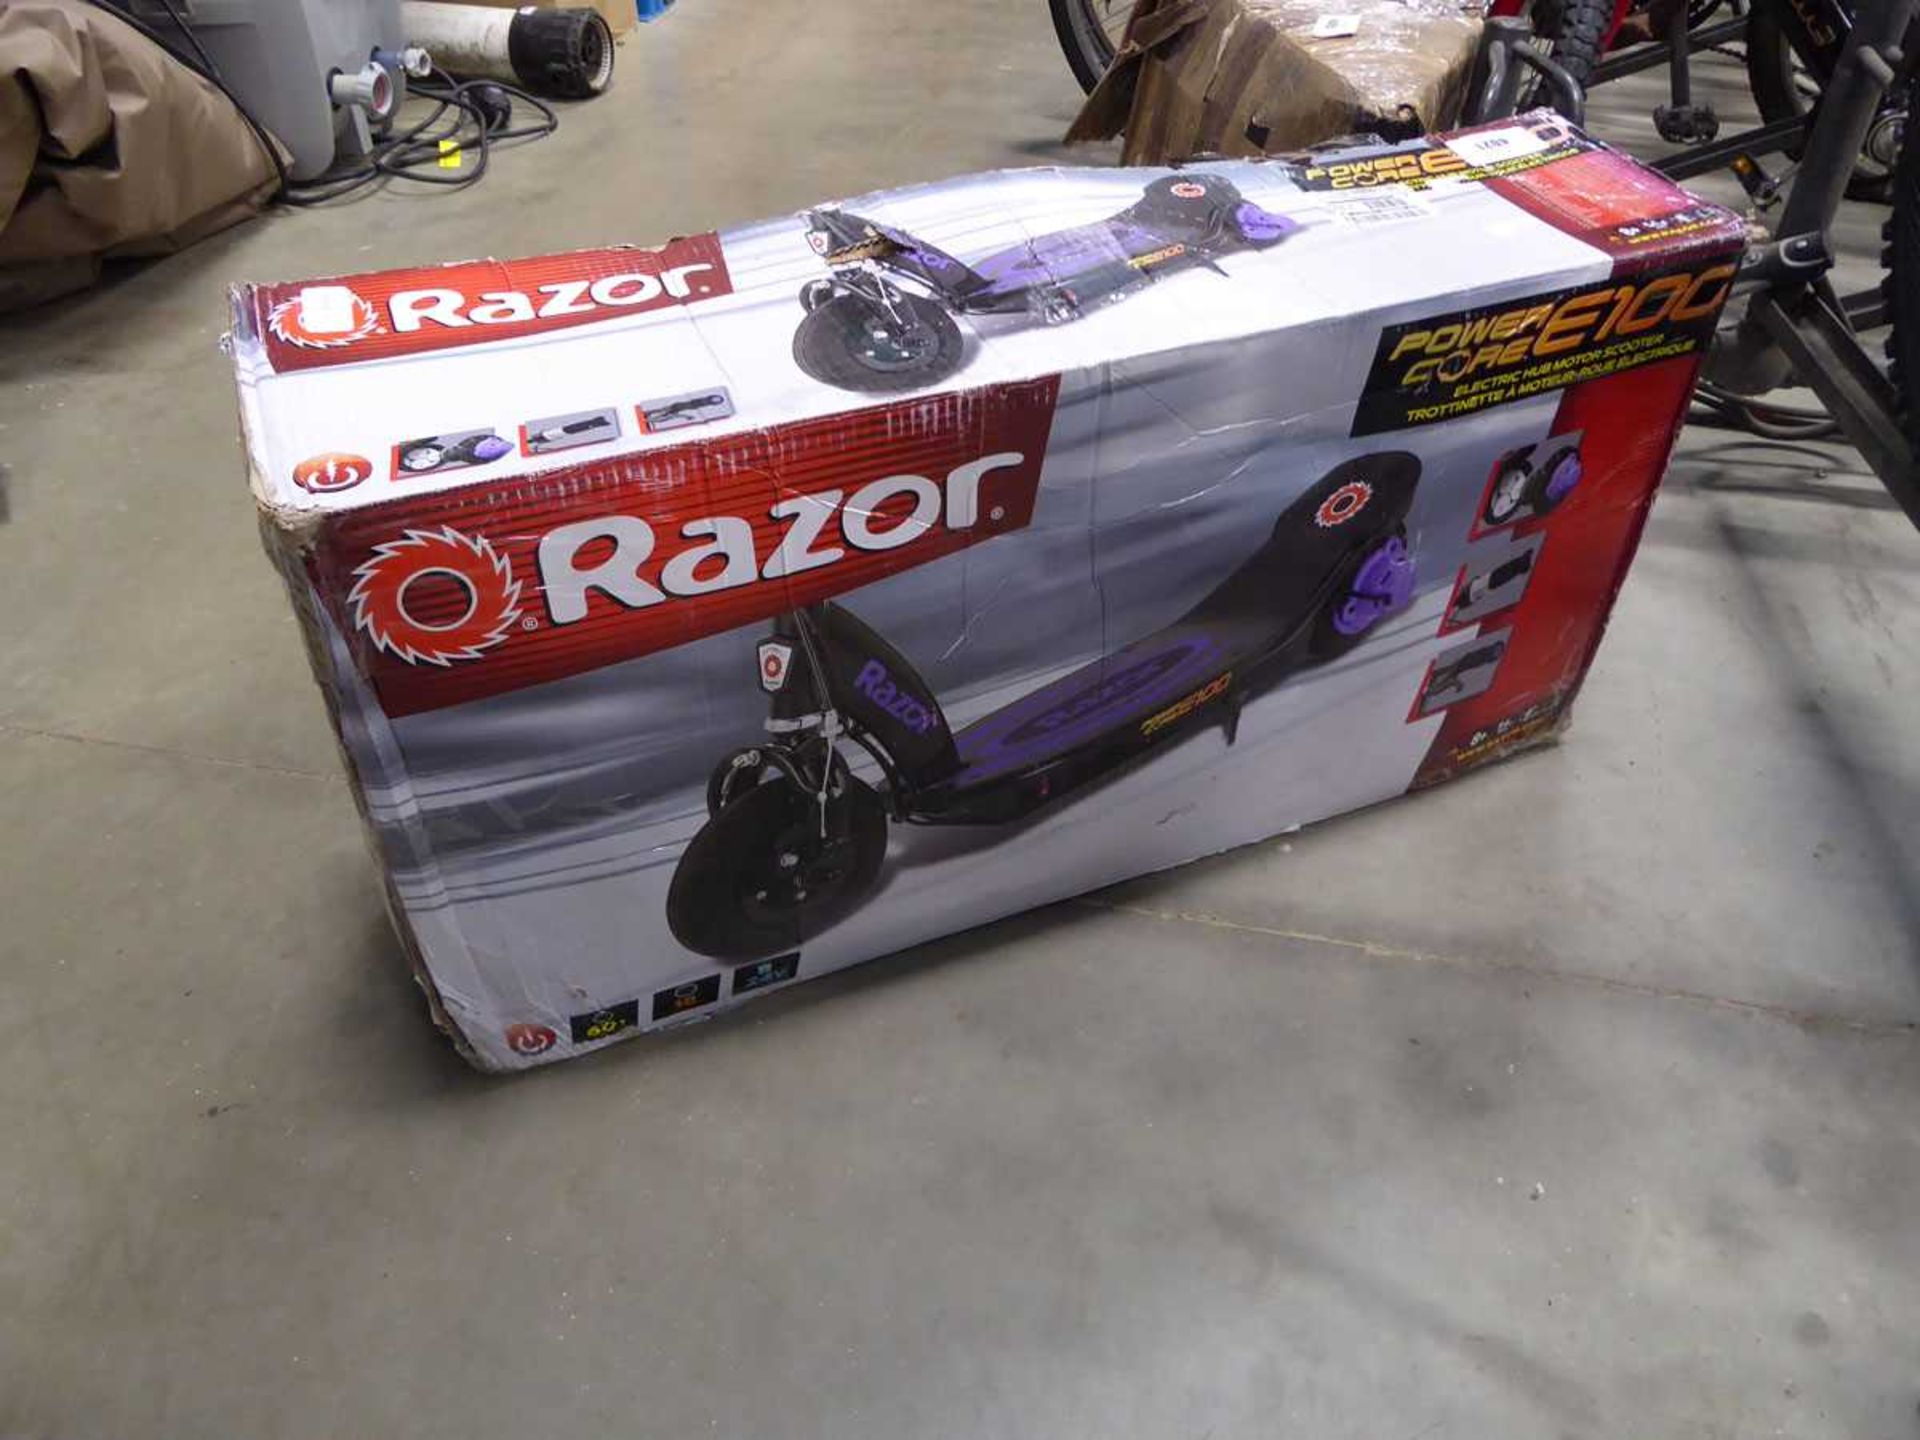 Boxed Razor scooter